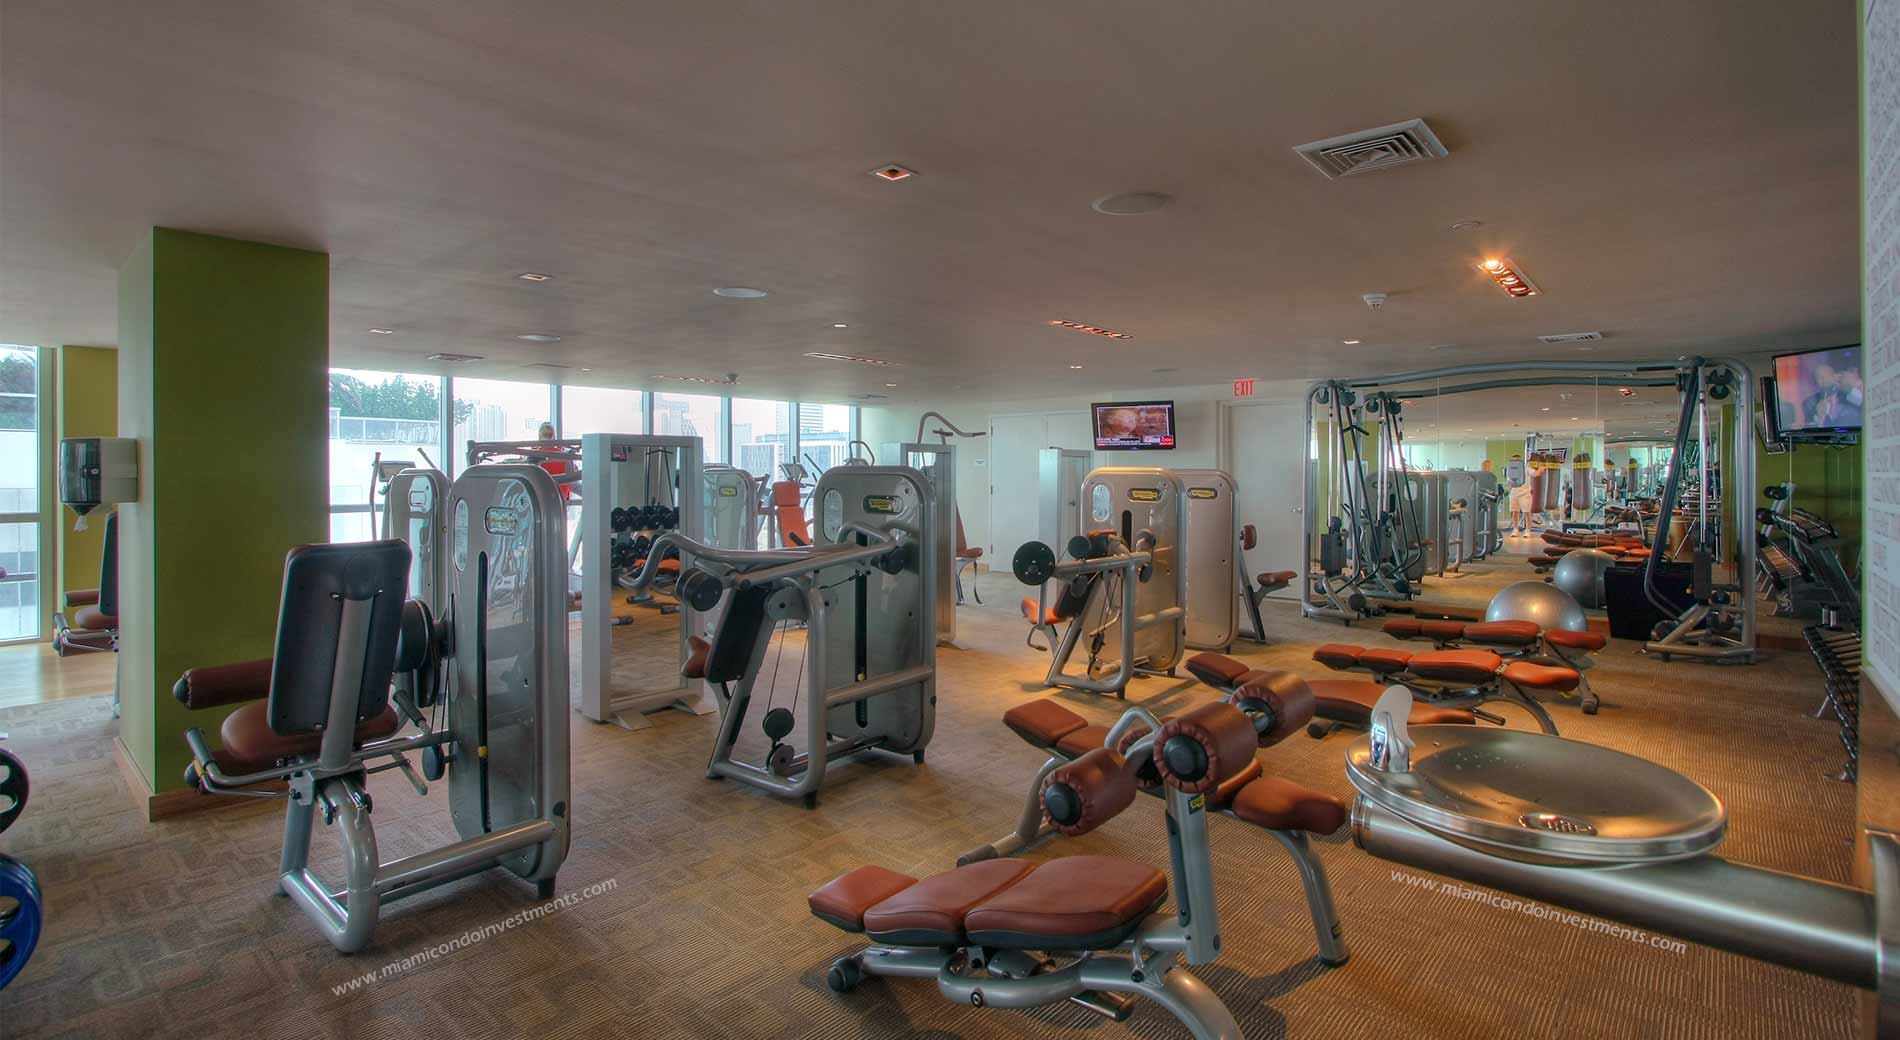 900 Biscayne Bay fitness center